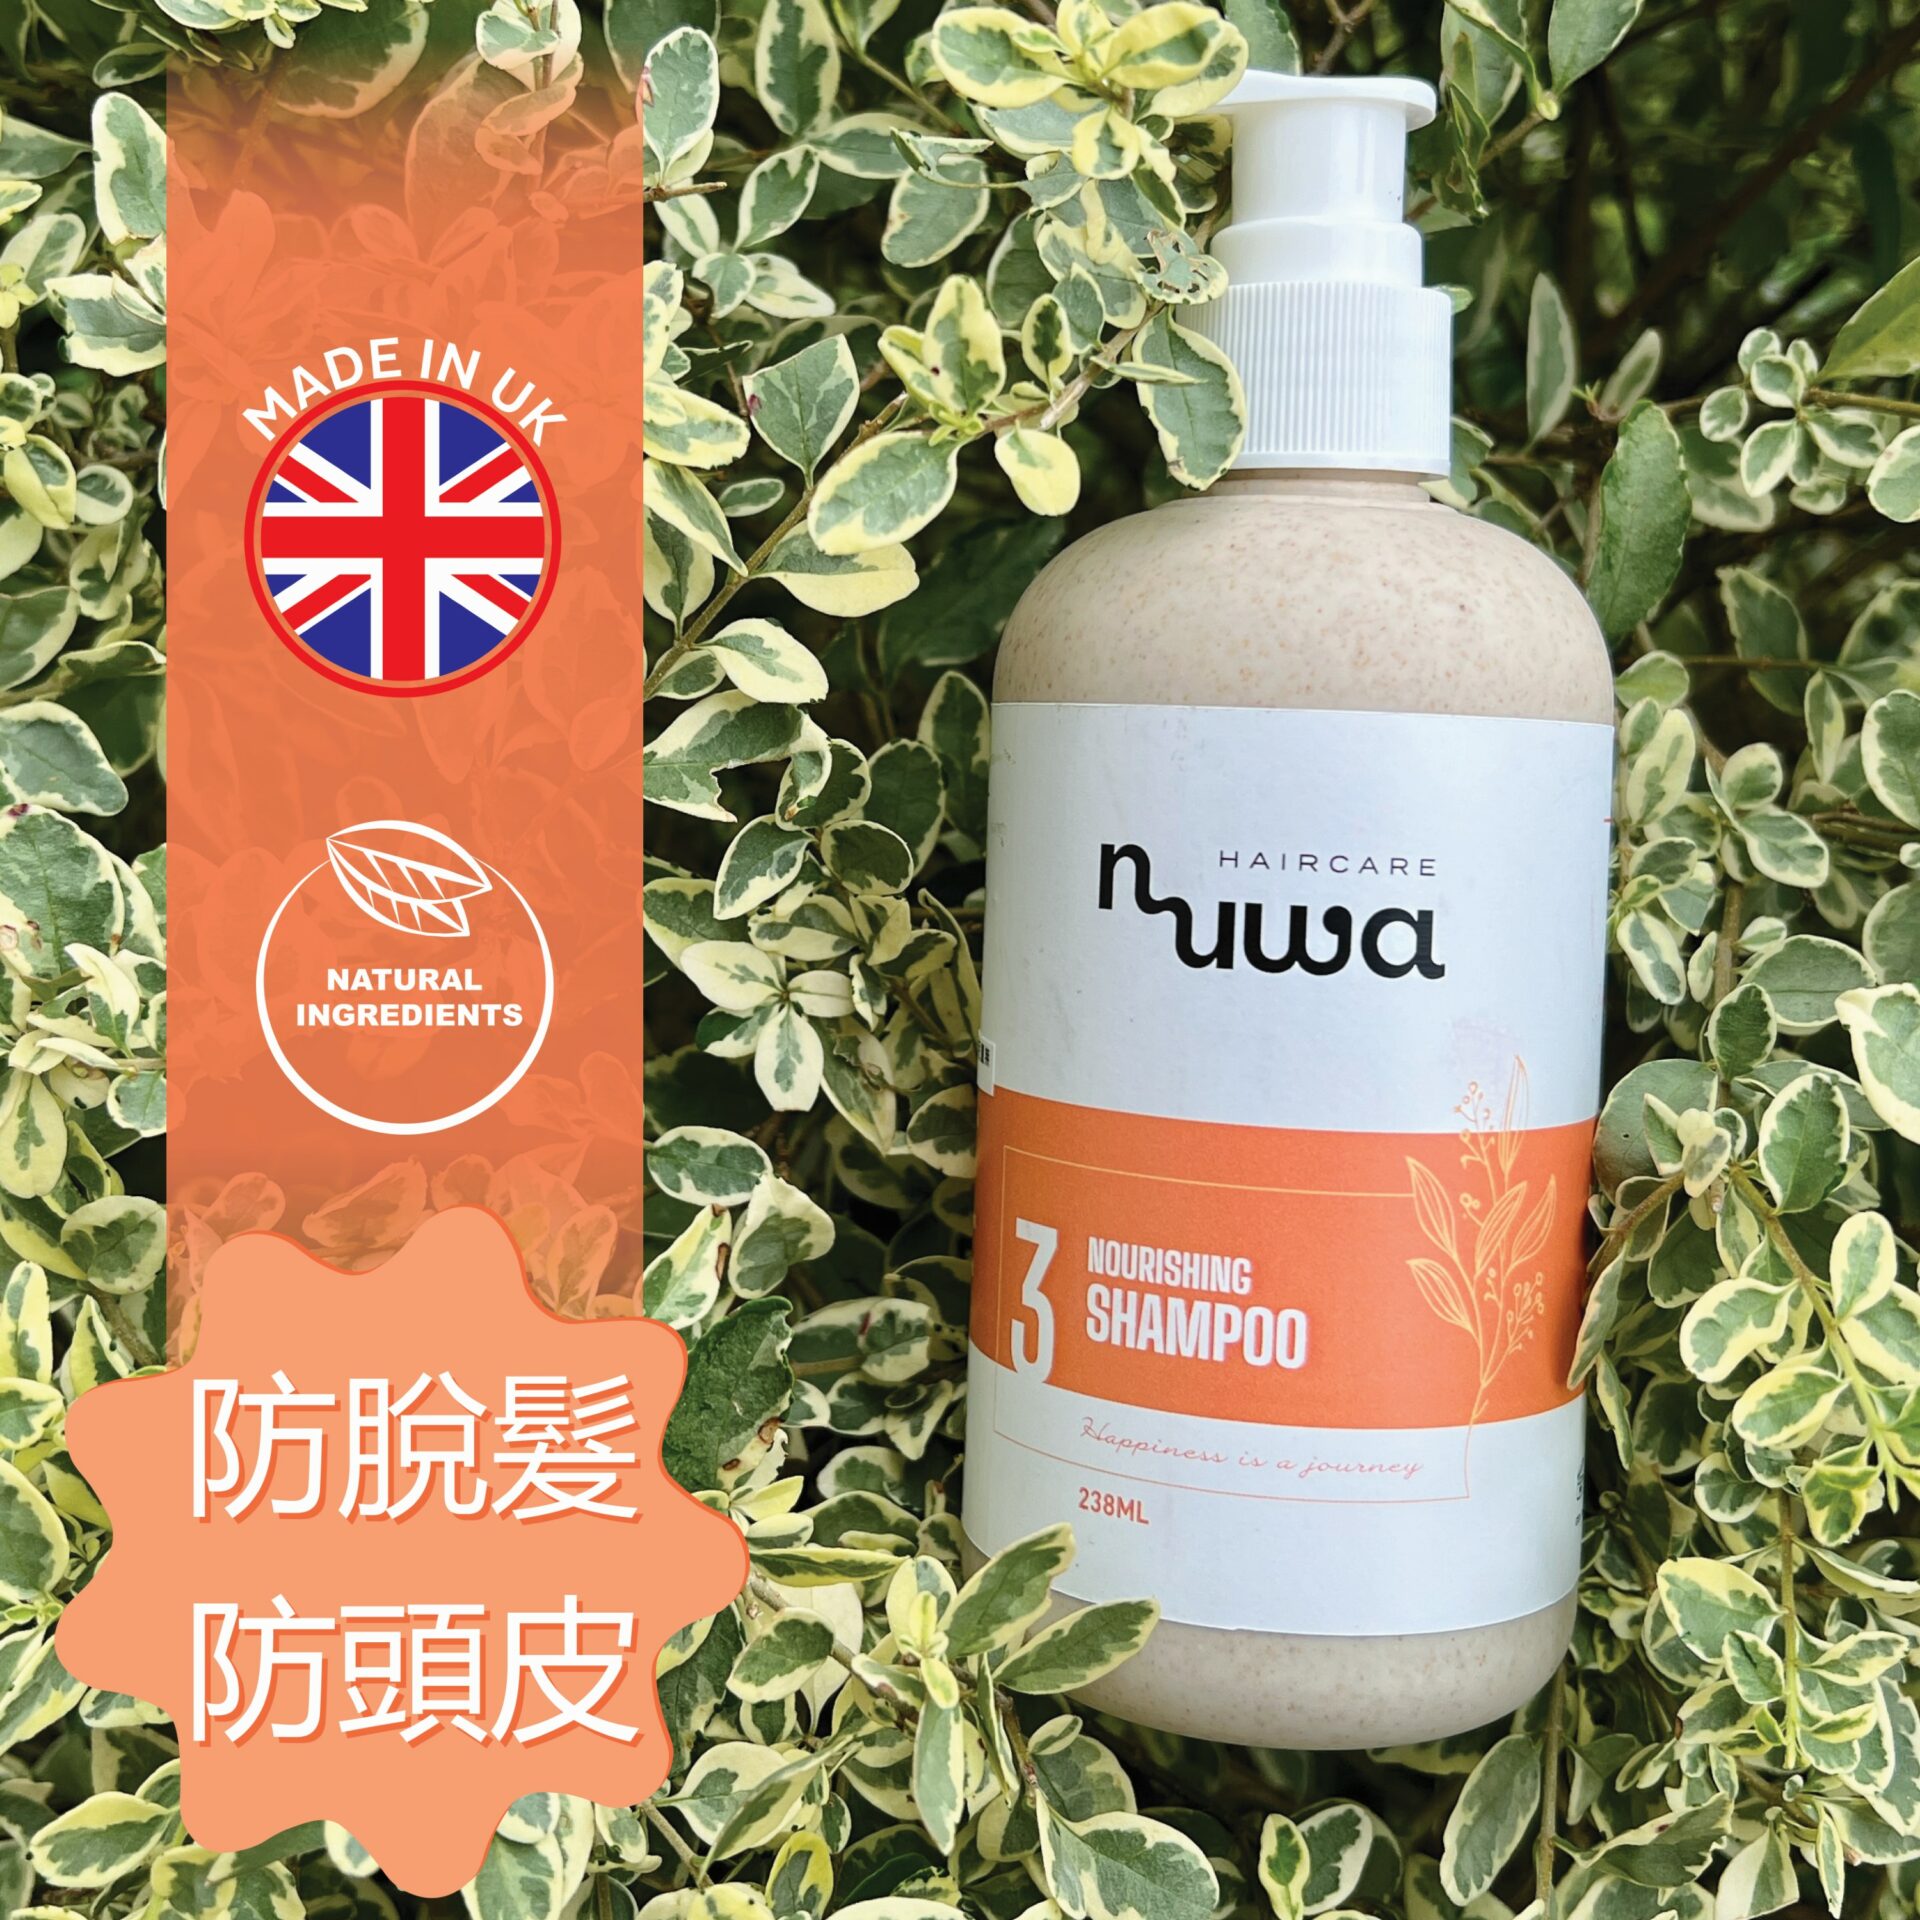 Lanuwa Nourishing Shampoo 238mL (No.3) - Hair Loss Prevention